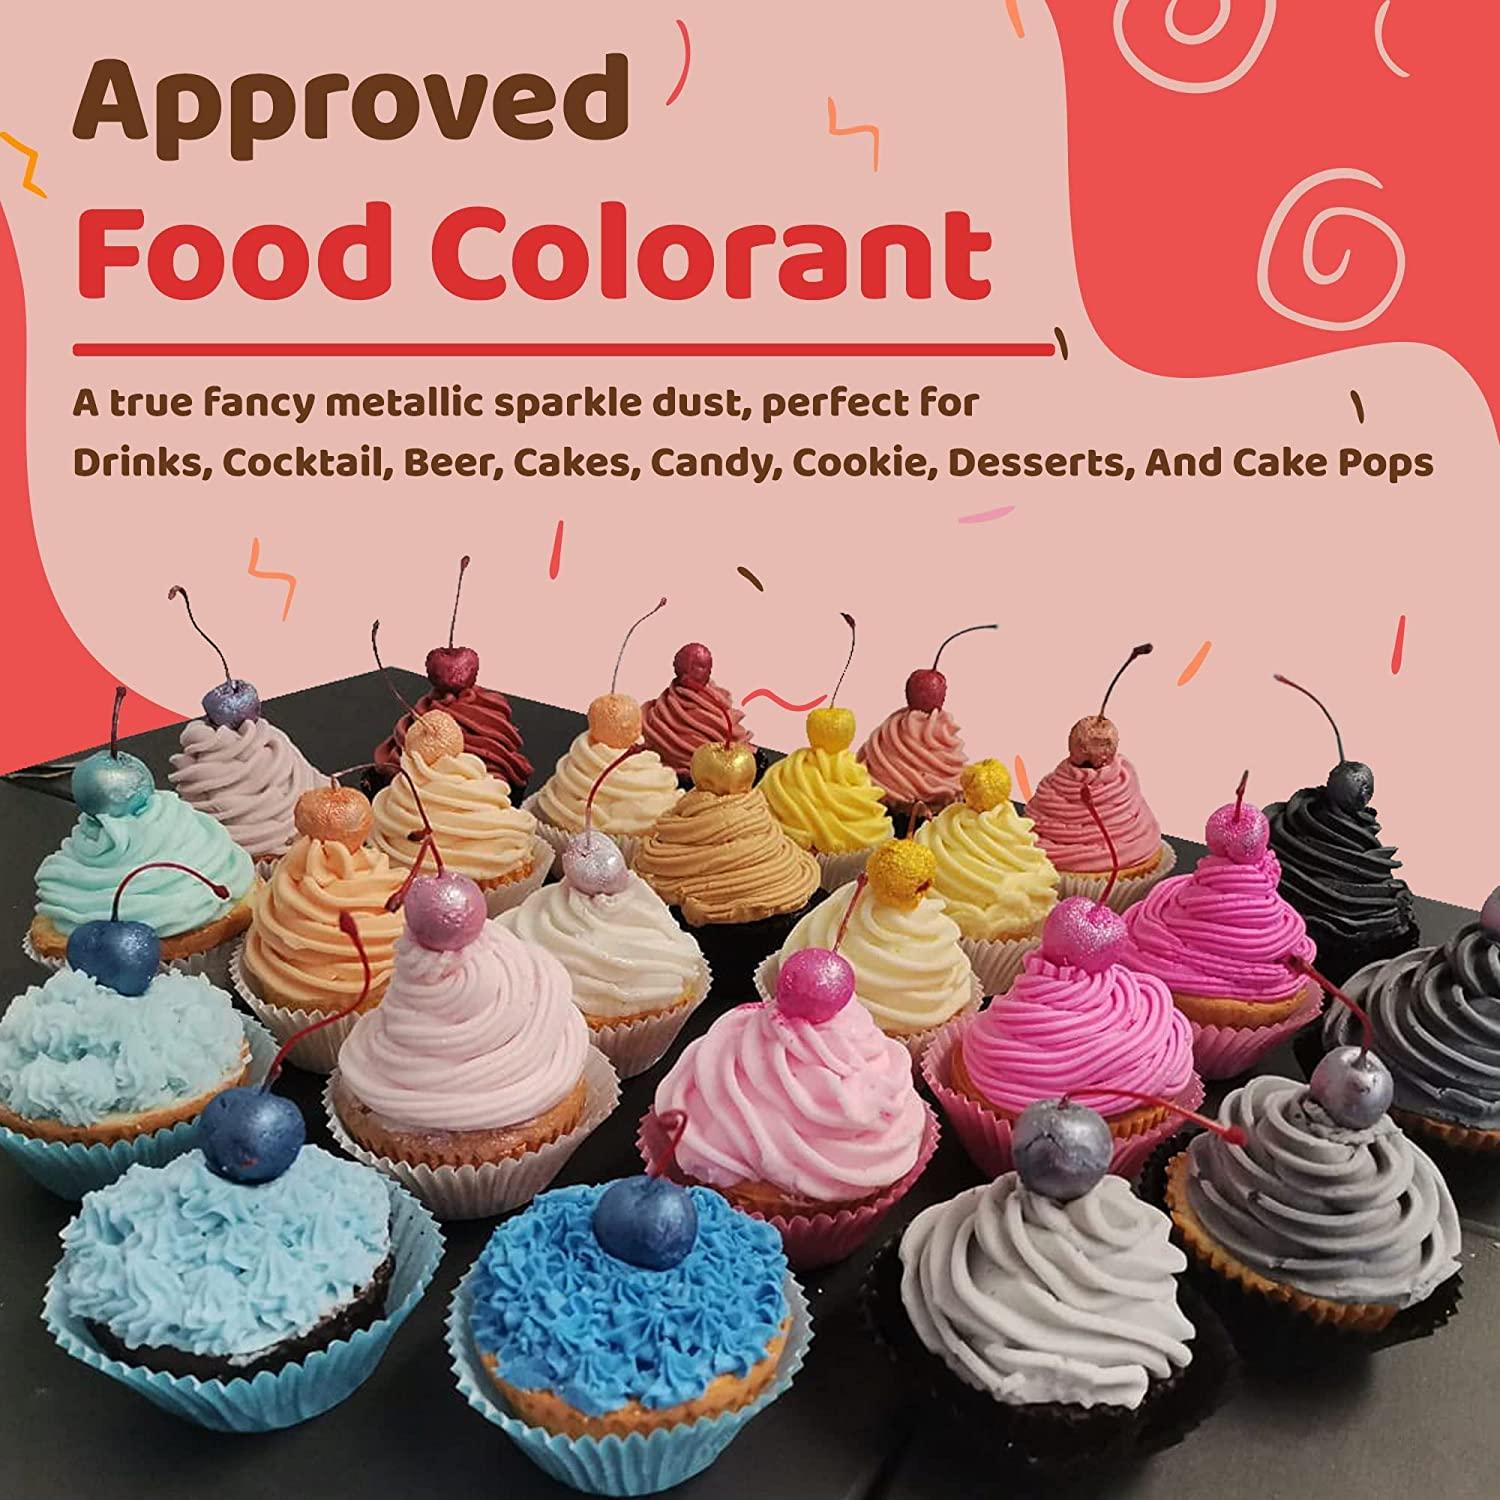 Sweet Birthday Cake Edible Glitter Sugar - Decorative Sugar for Foods,  Fruits, Muffins, Cake Decorating. FDA Compliant (8 Grams)